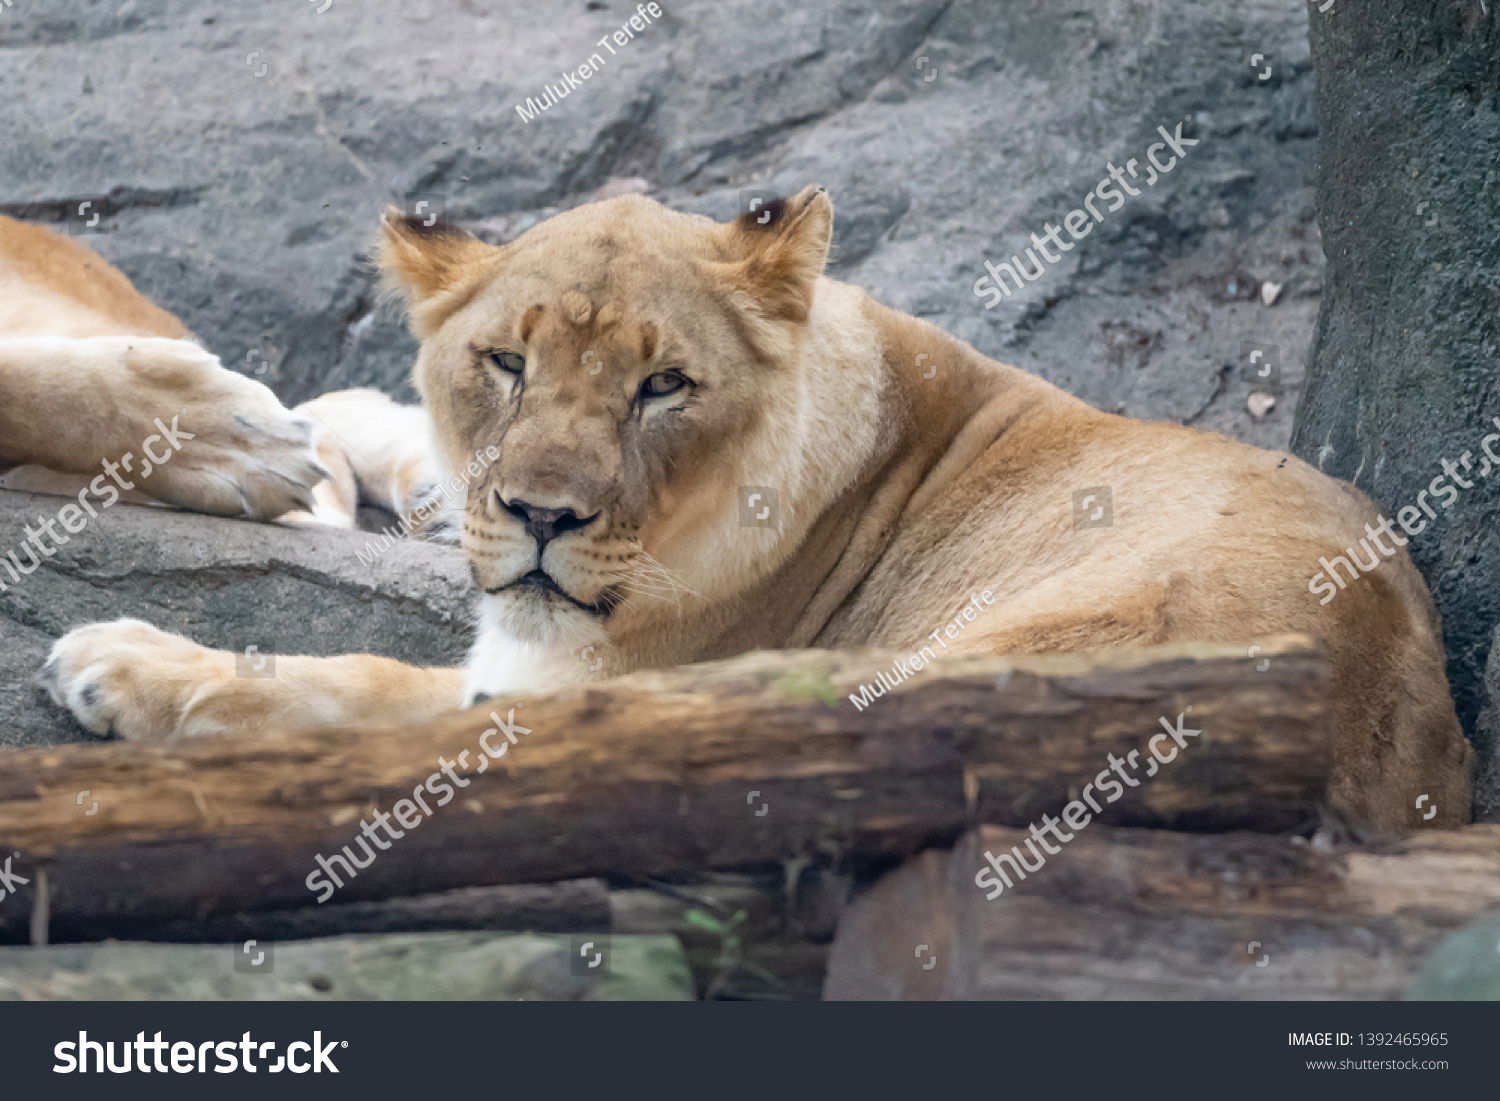 Lion sitting for a break #1392465965